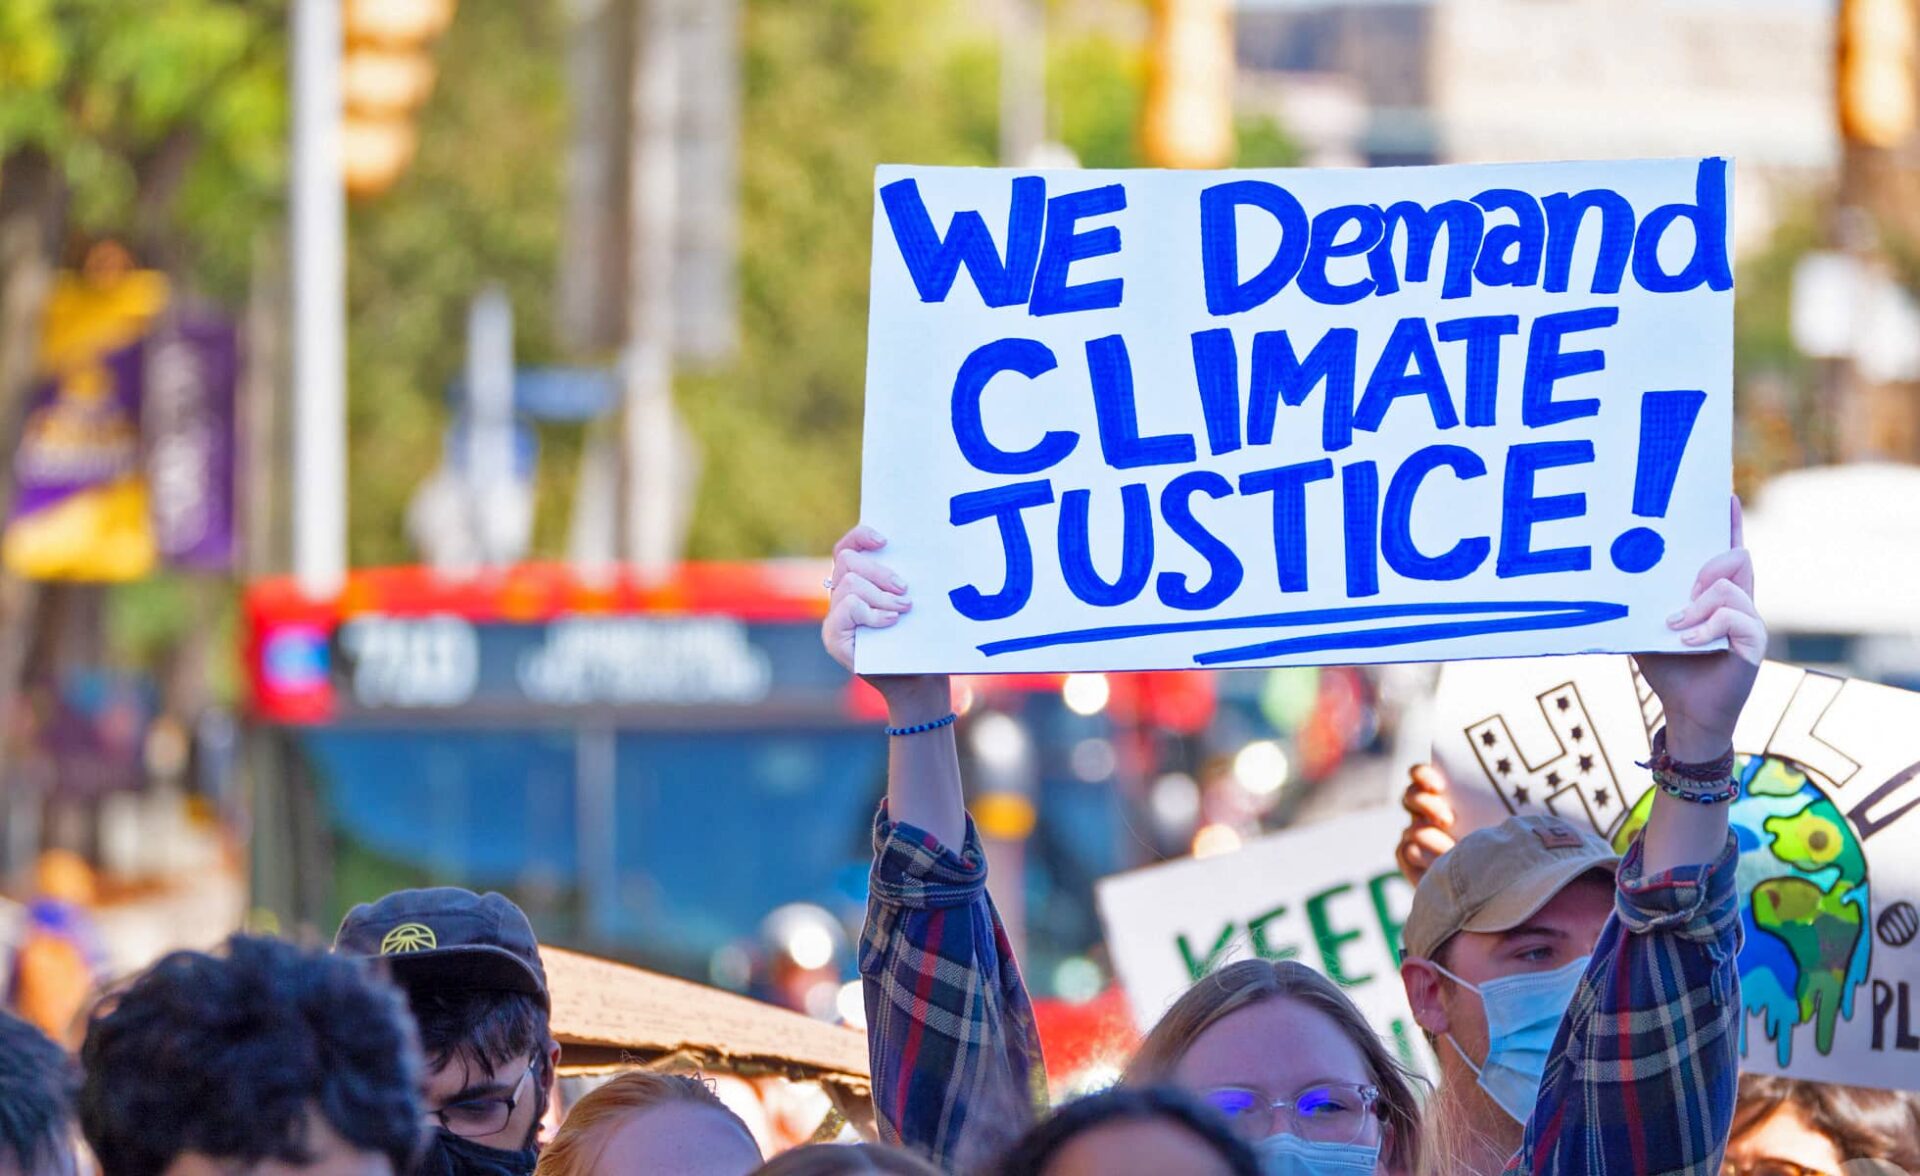 Youth strikes spotlight international climate events